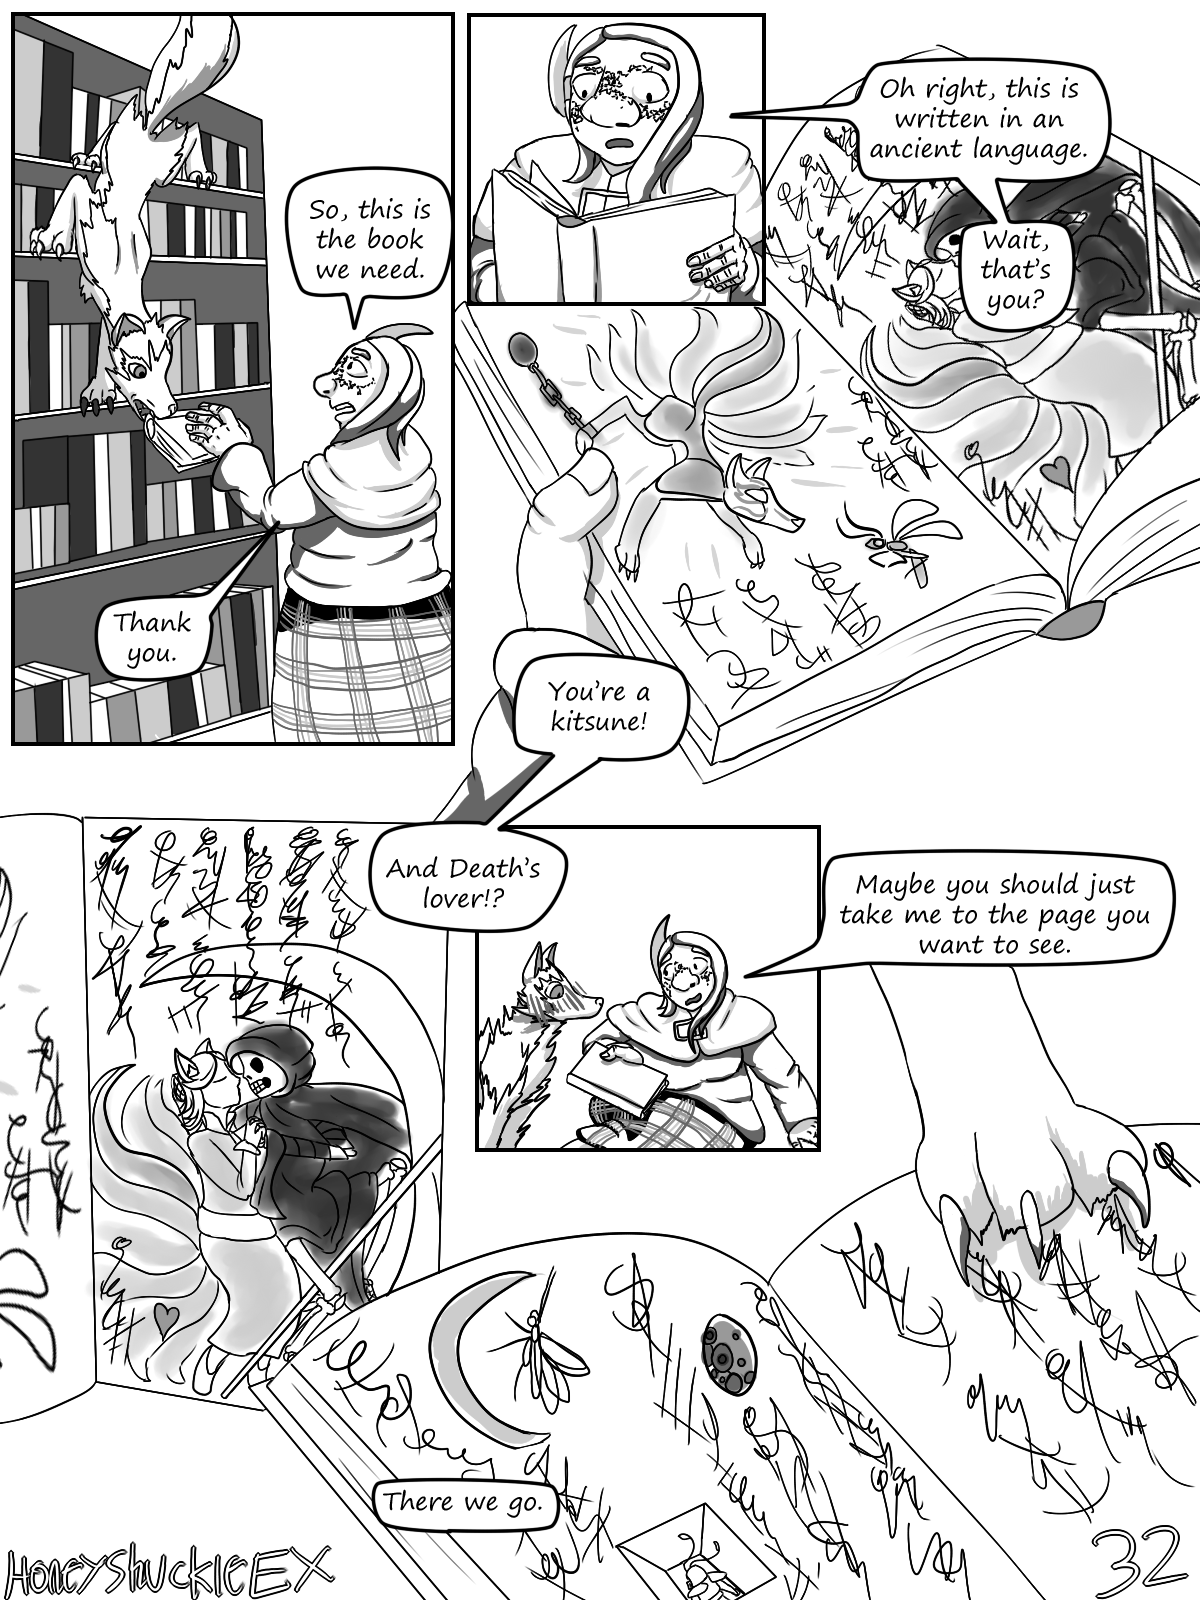 Pixie Dust page 32